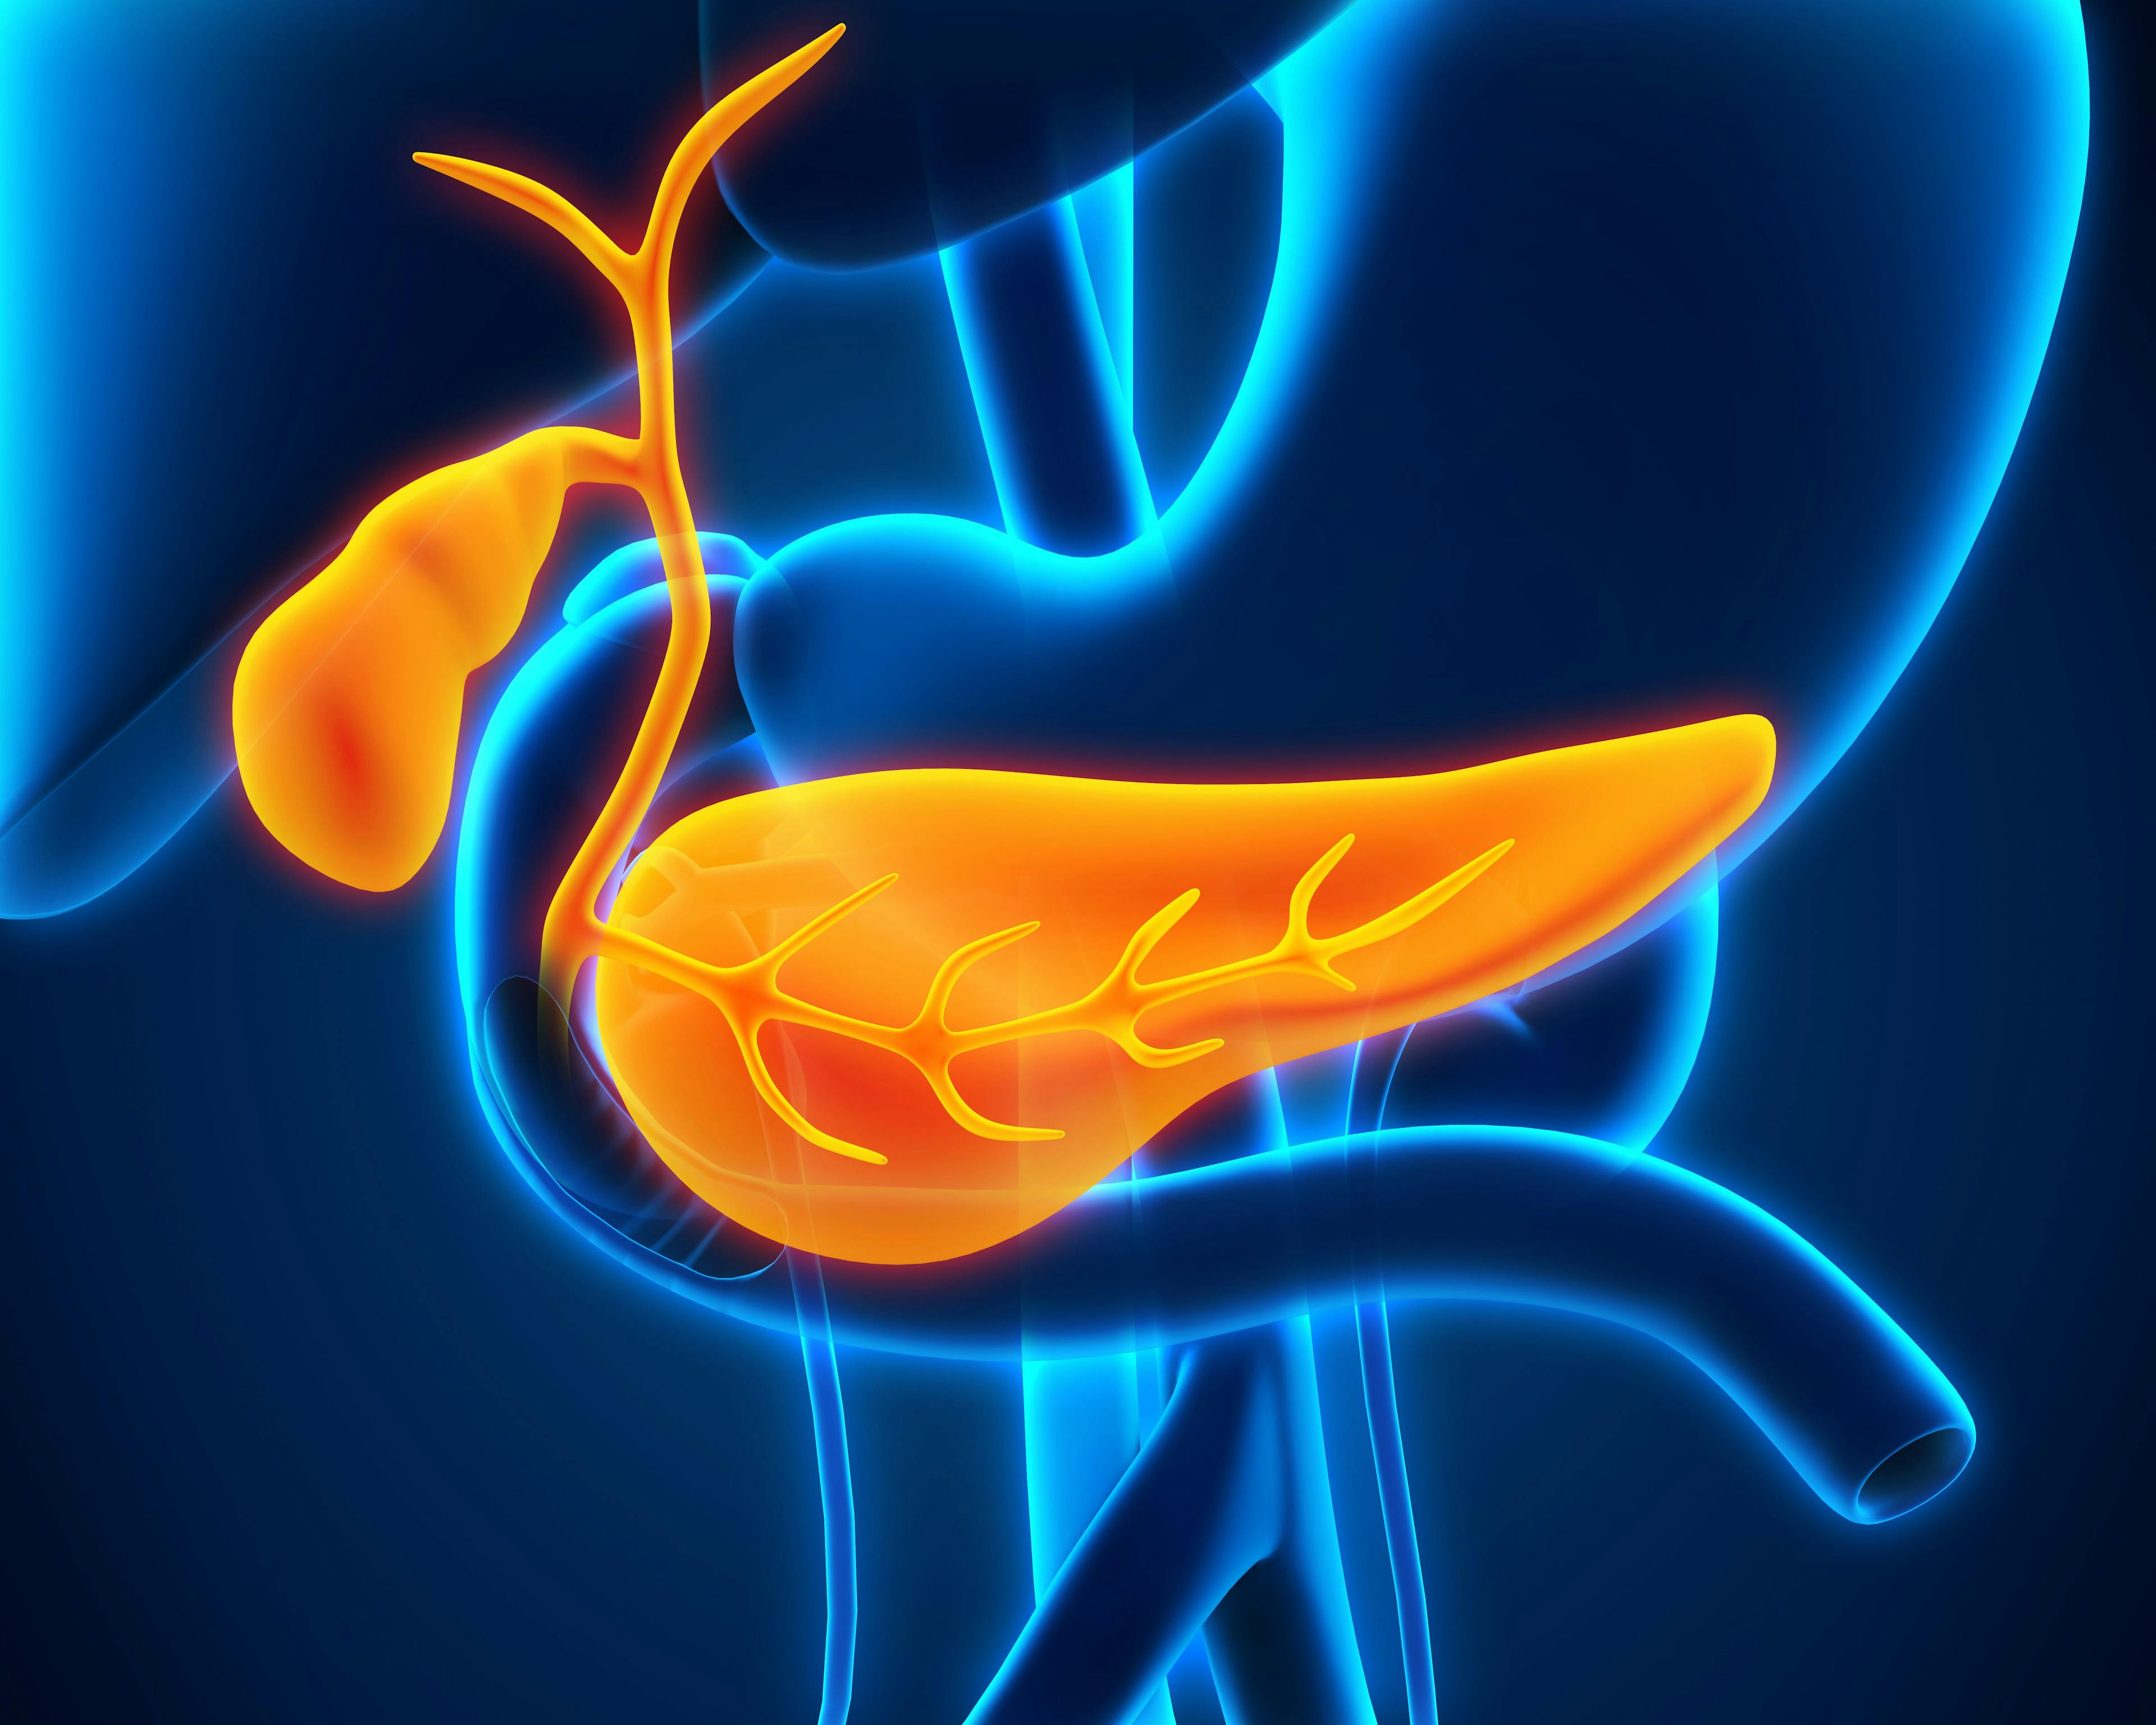 x-ray image of a pancreas